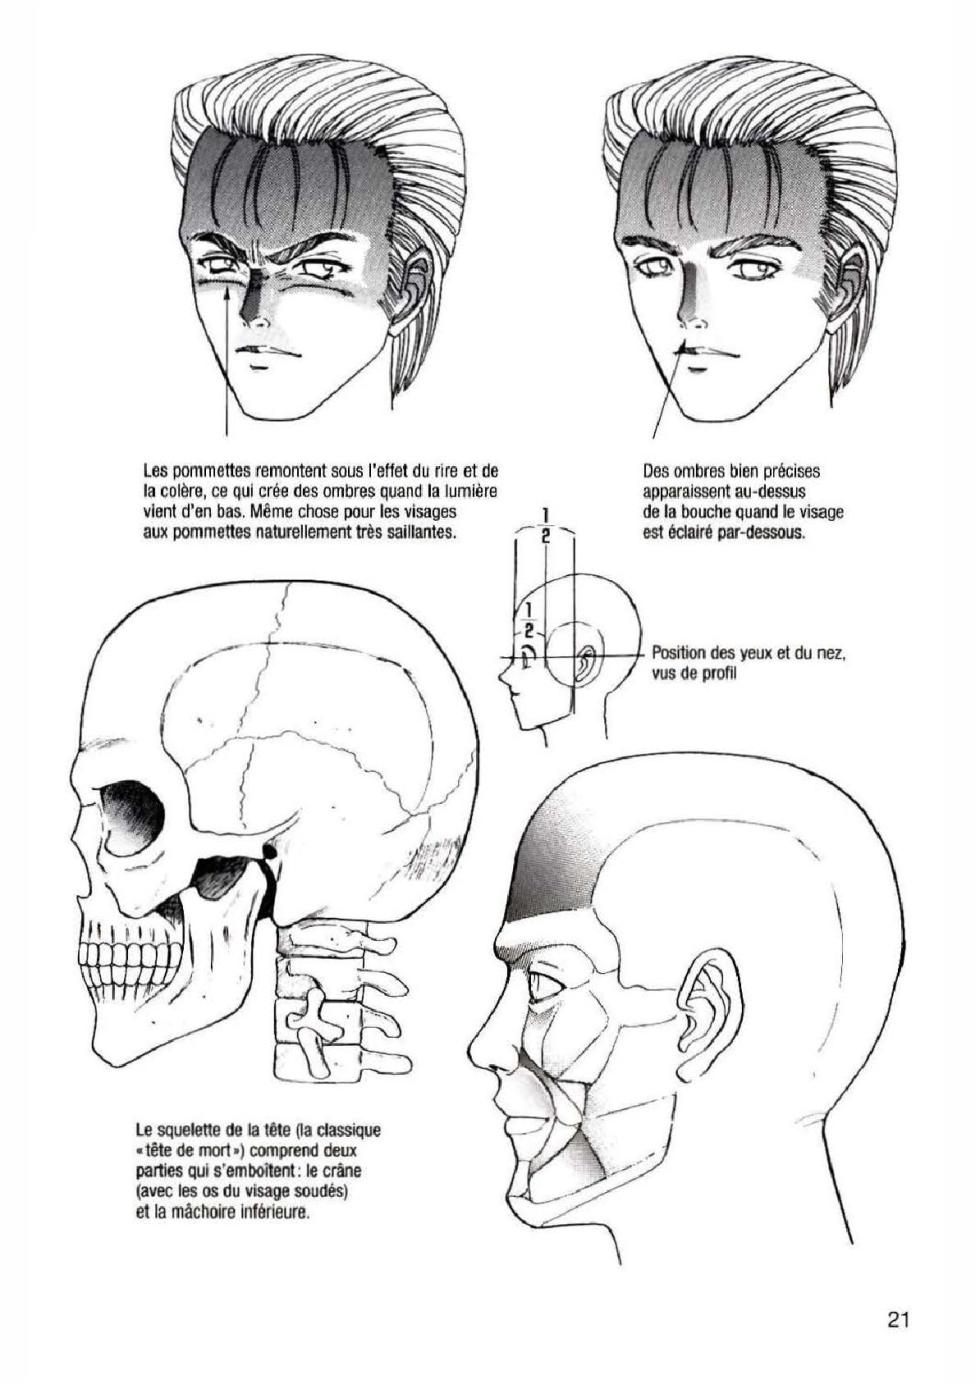 How To Draw Manga Vol. 25 Bodies and Anatomy - Page 21